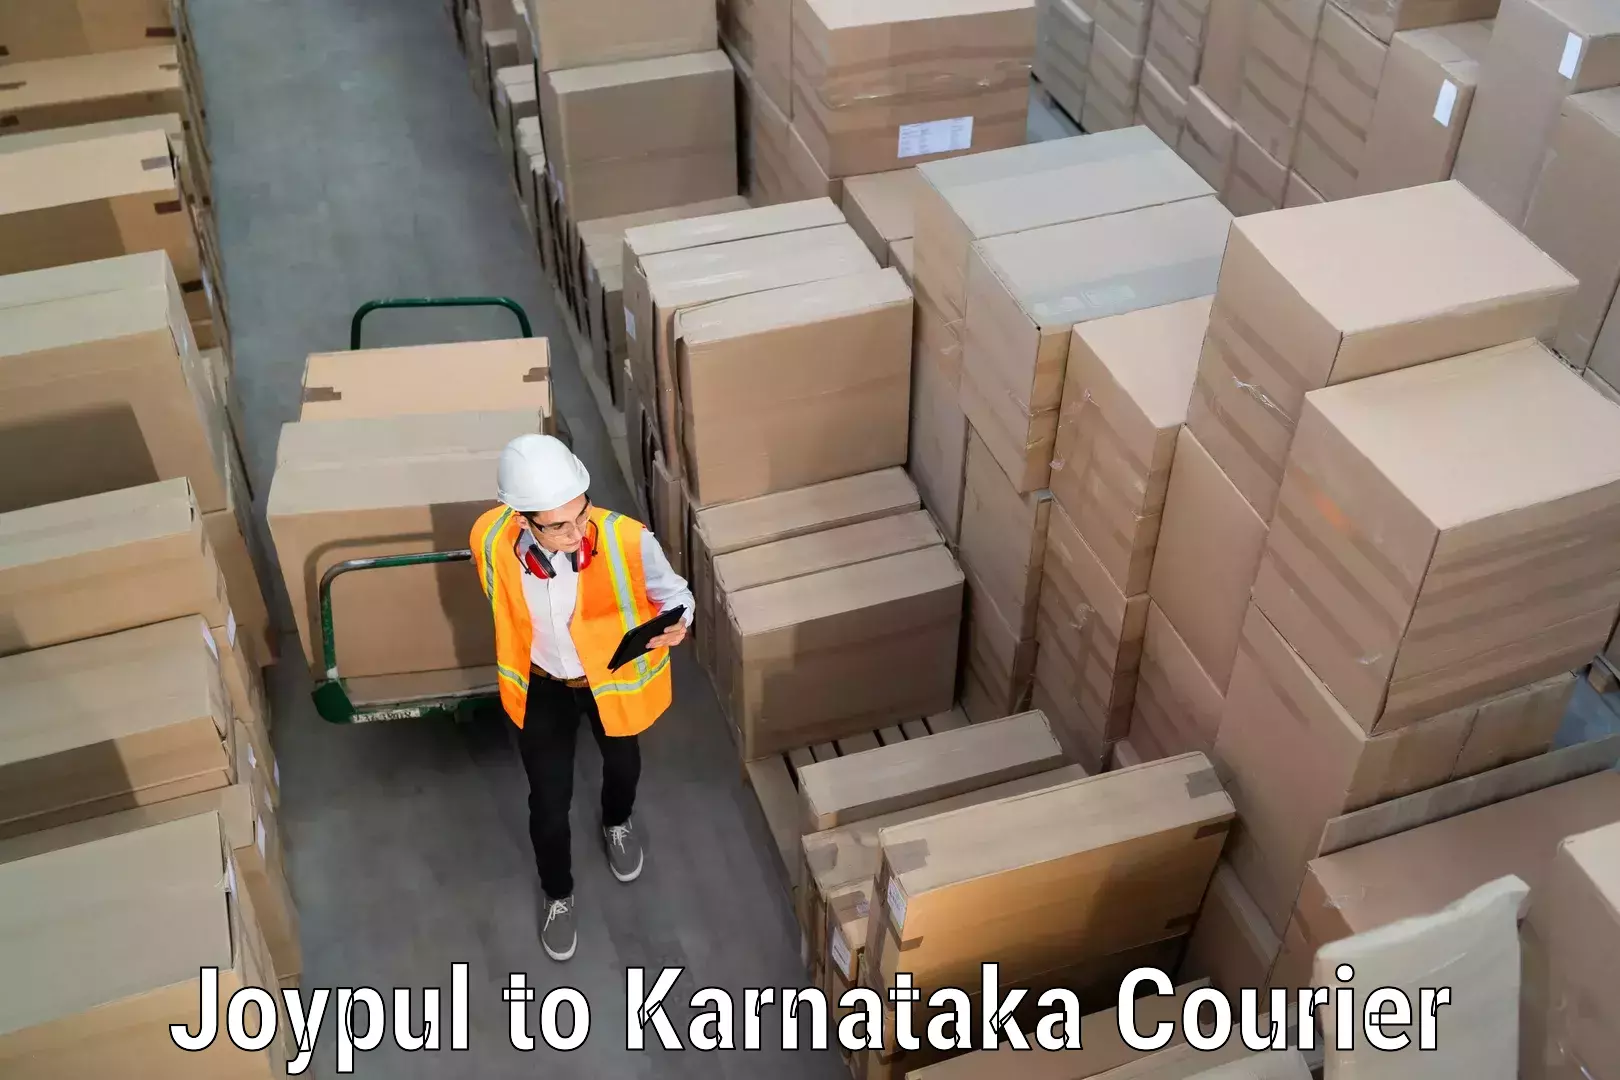 Trusted relocation experts Joypul to Karnataka